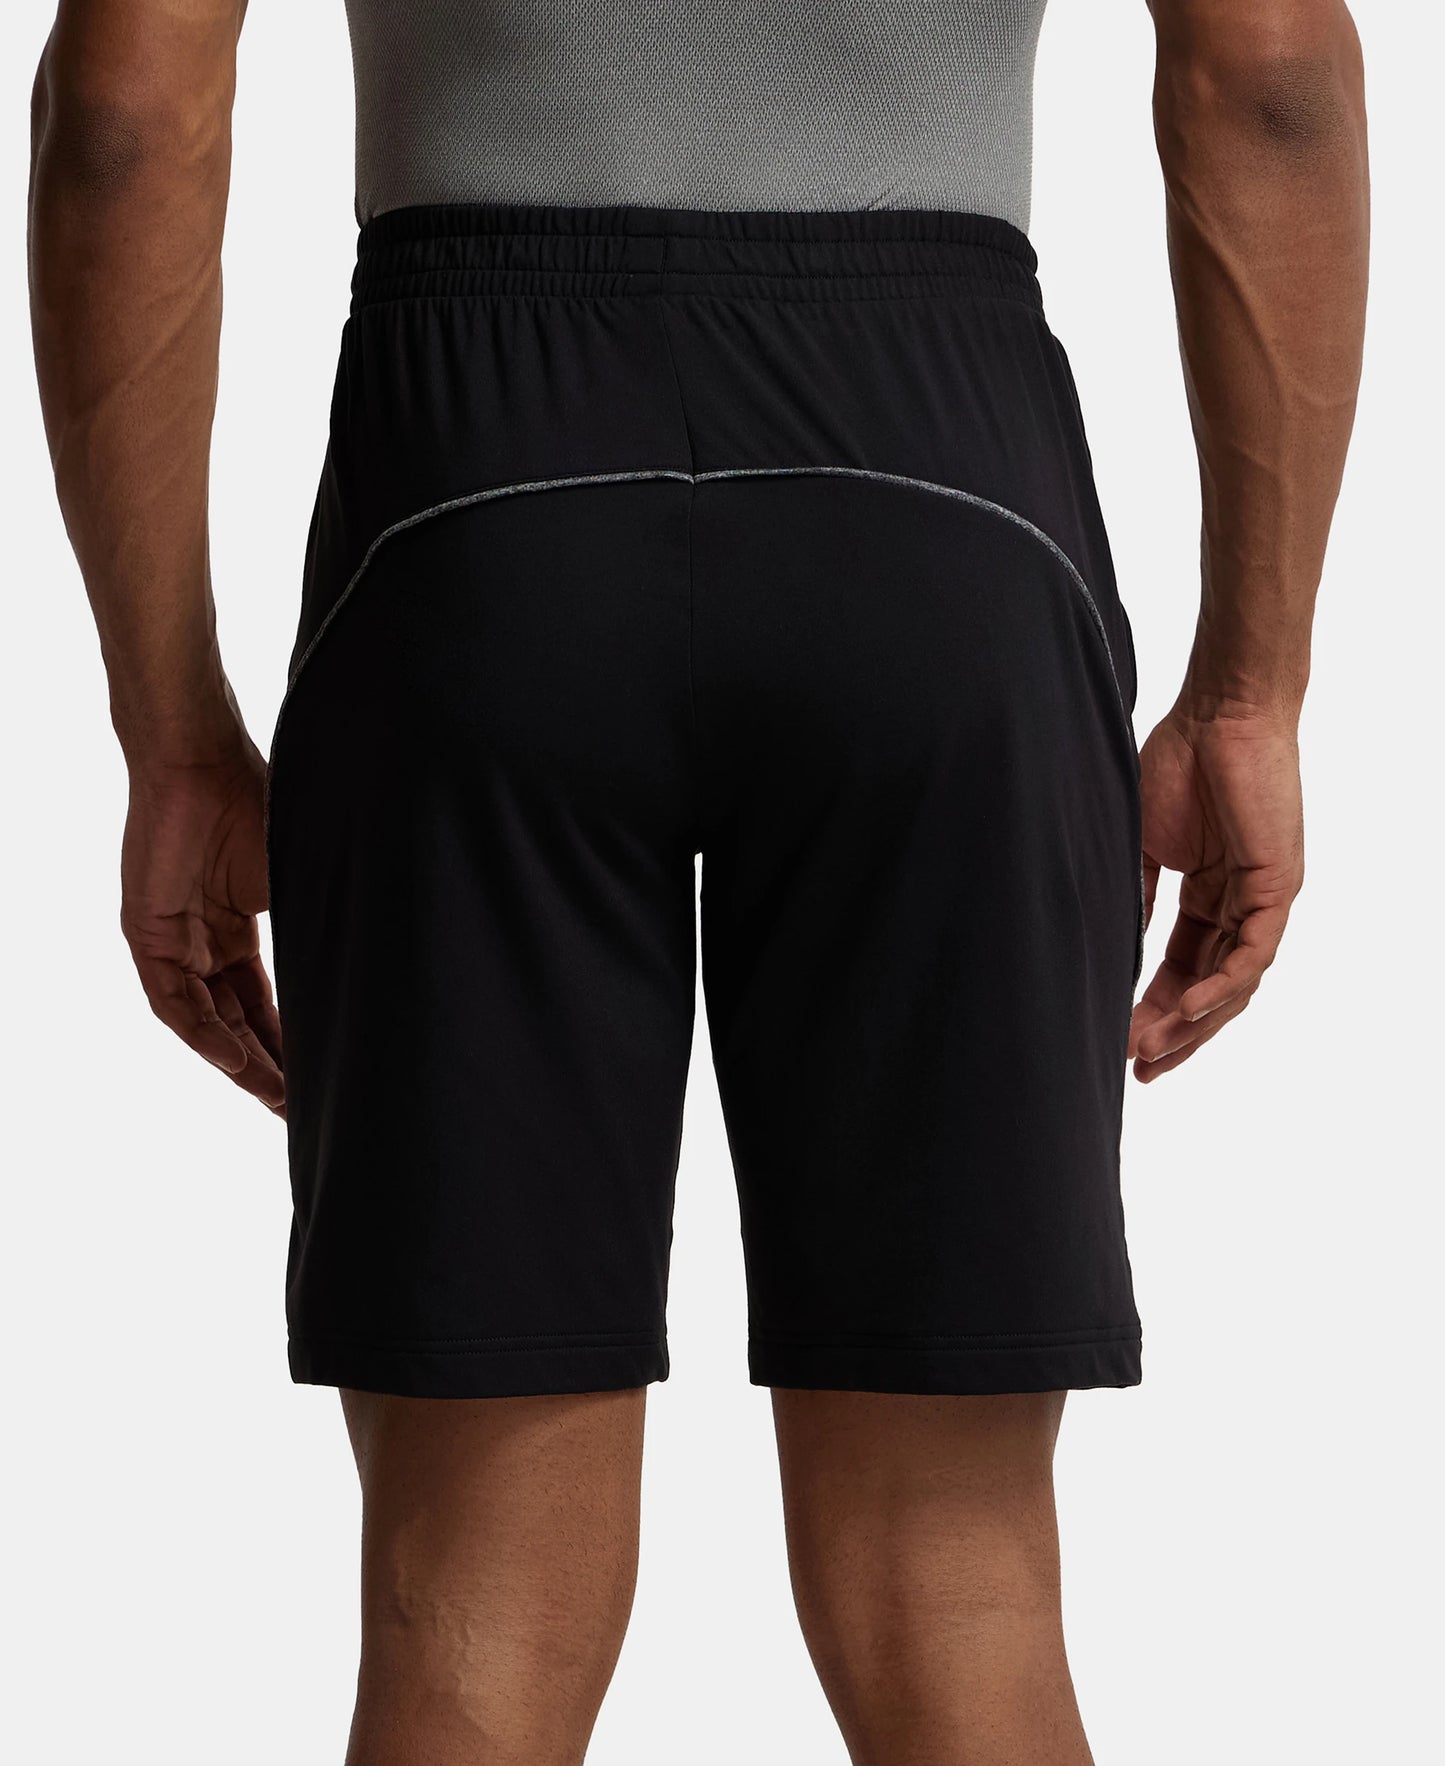 Soft Touch Microfiber Elastane Stretch Shorts with StayFresh Treatment - Black-3